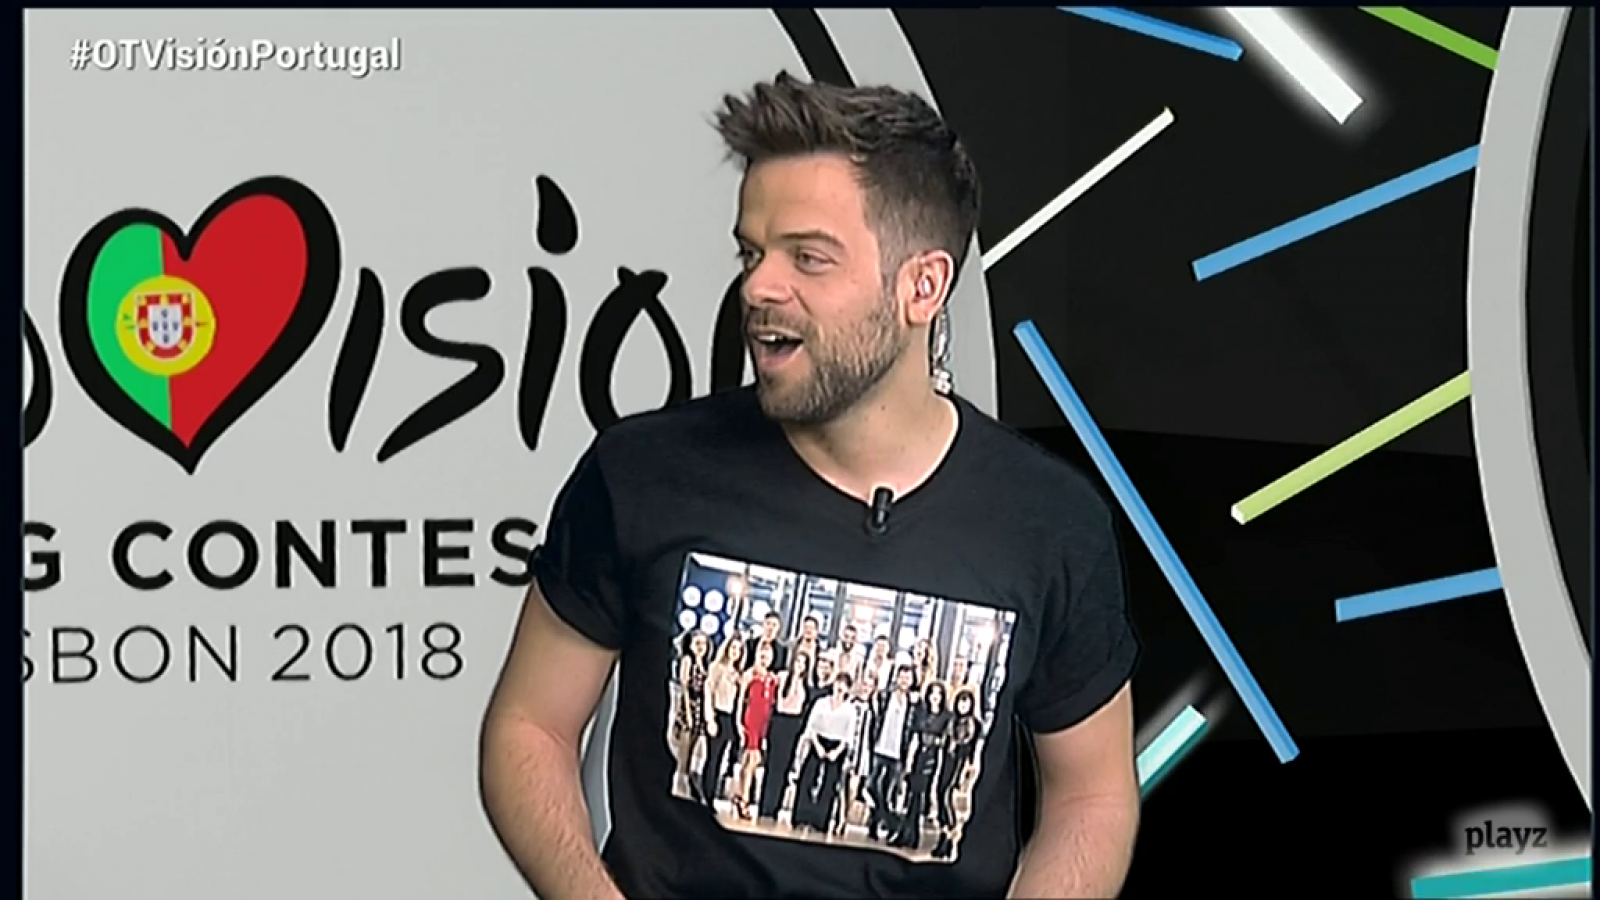 Eurovisión 2018: Ricky, enviado especial de RTVE.es - OTVisión